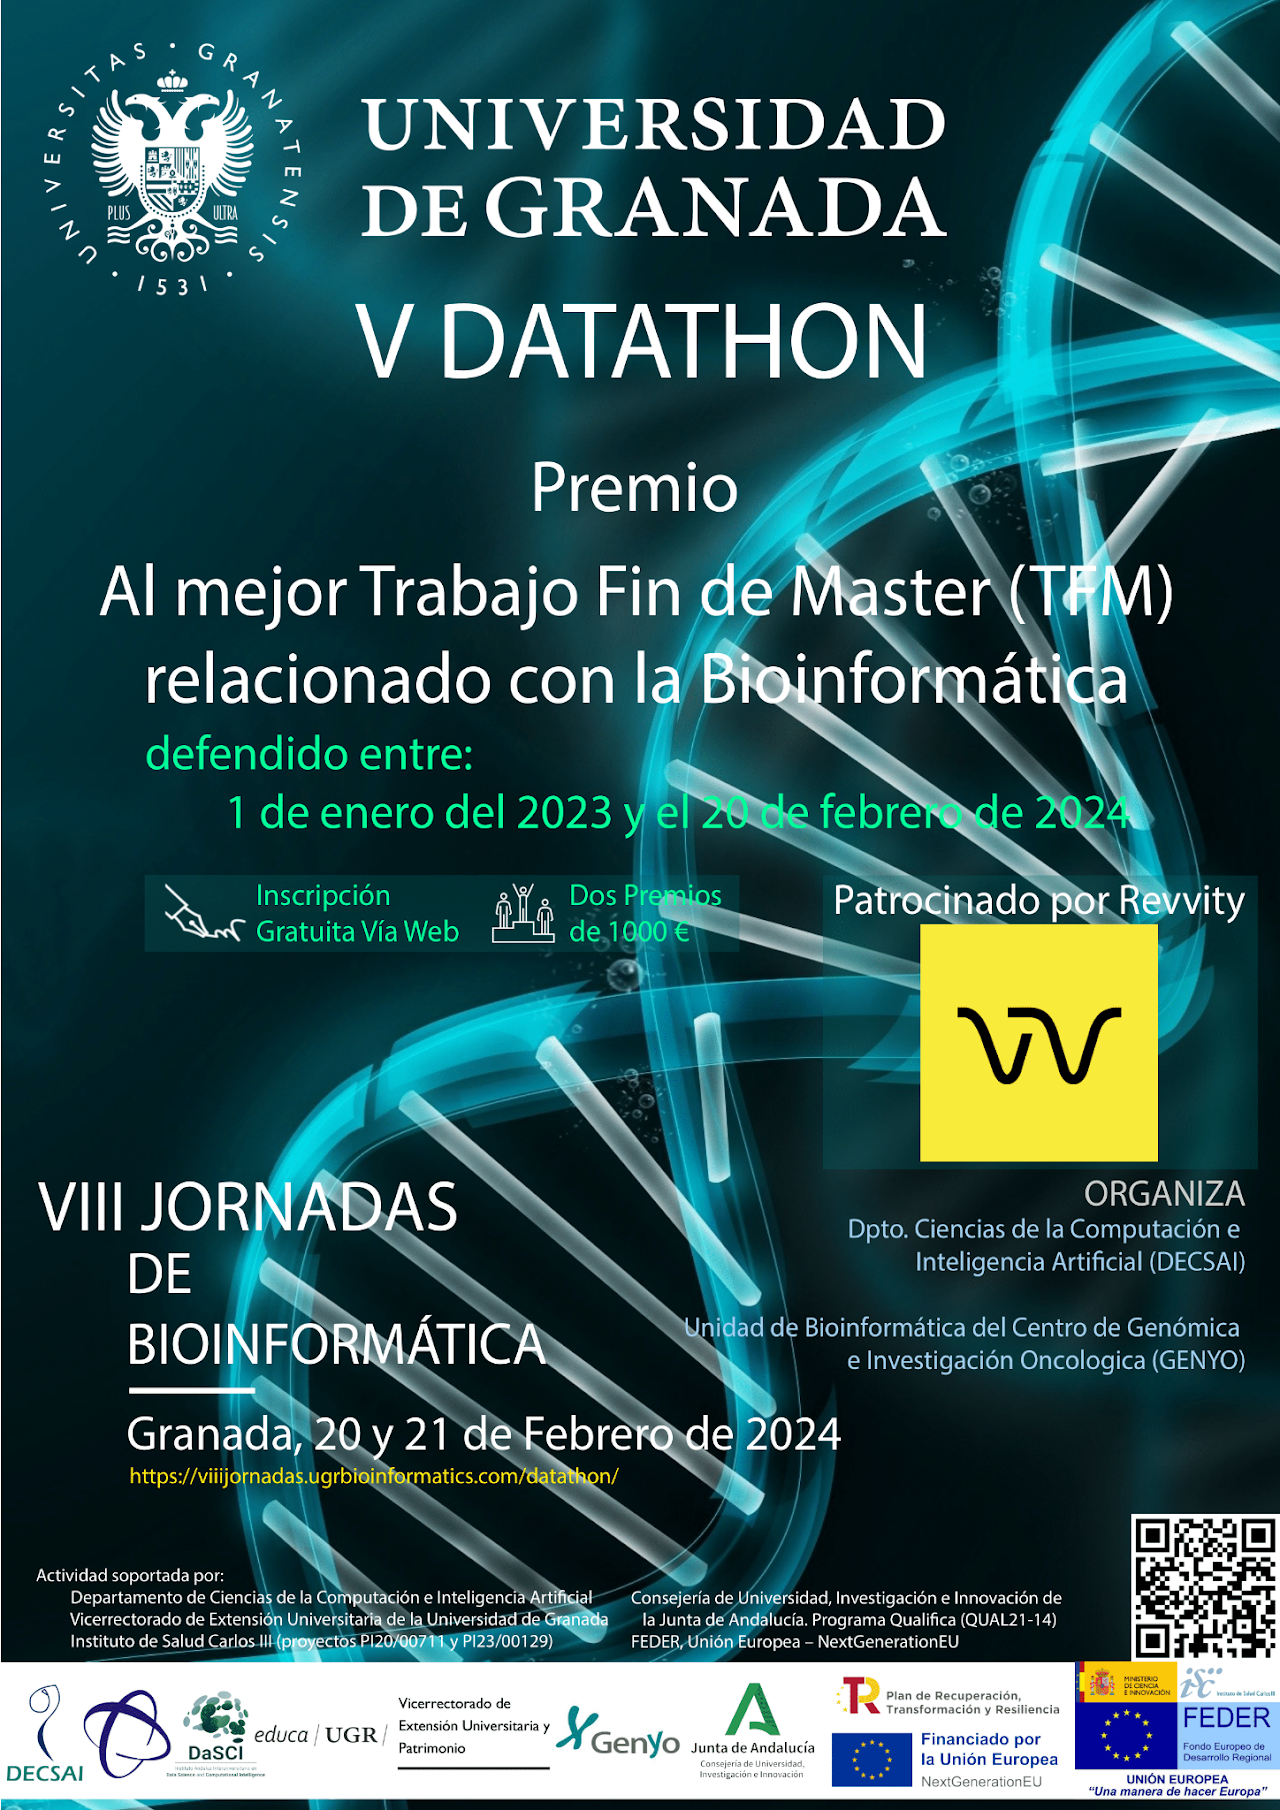 cartel del V Datathon de Bioinformática